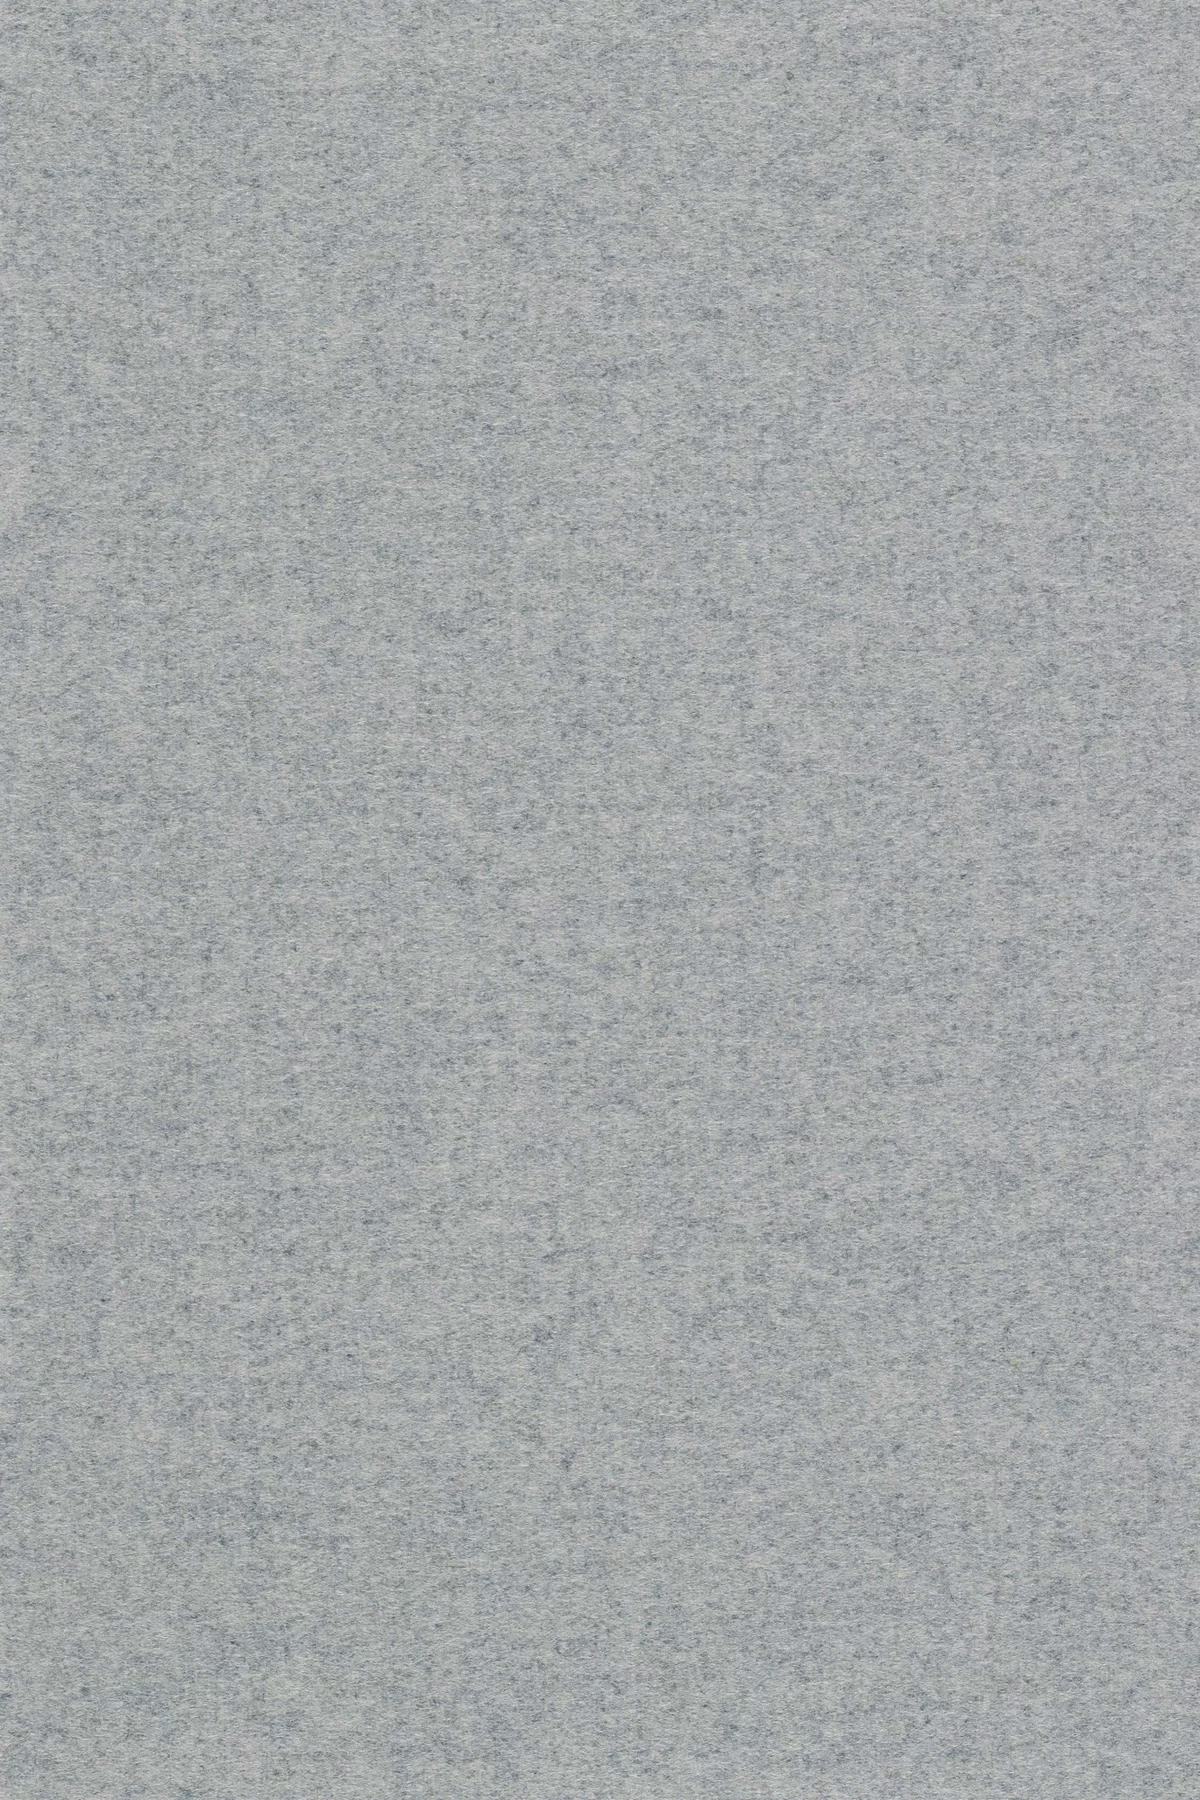 Fabric sample Divina MD 713 grey